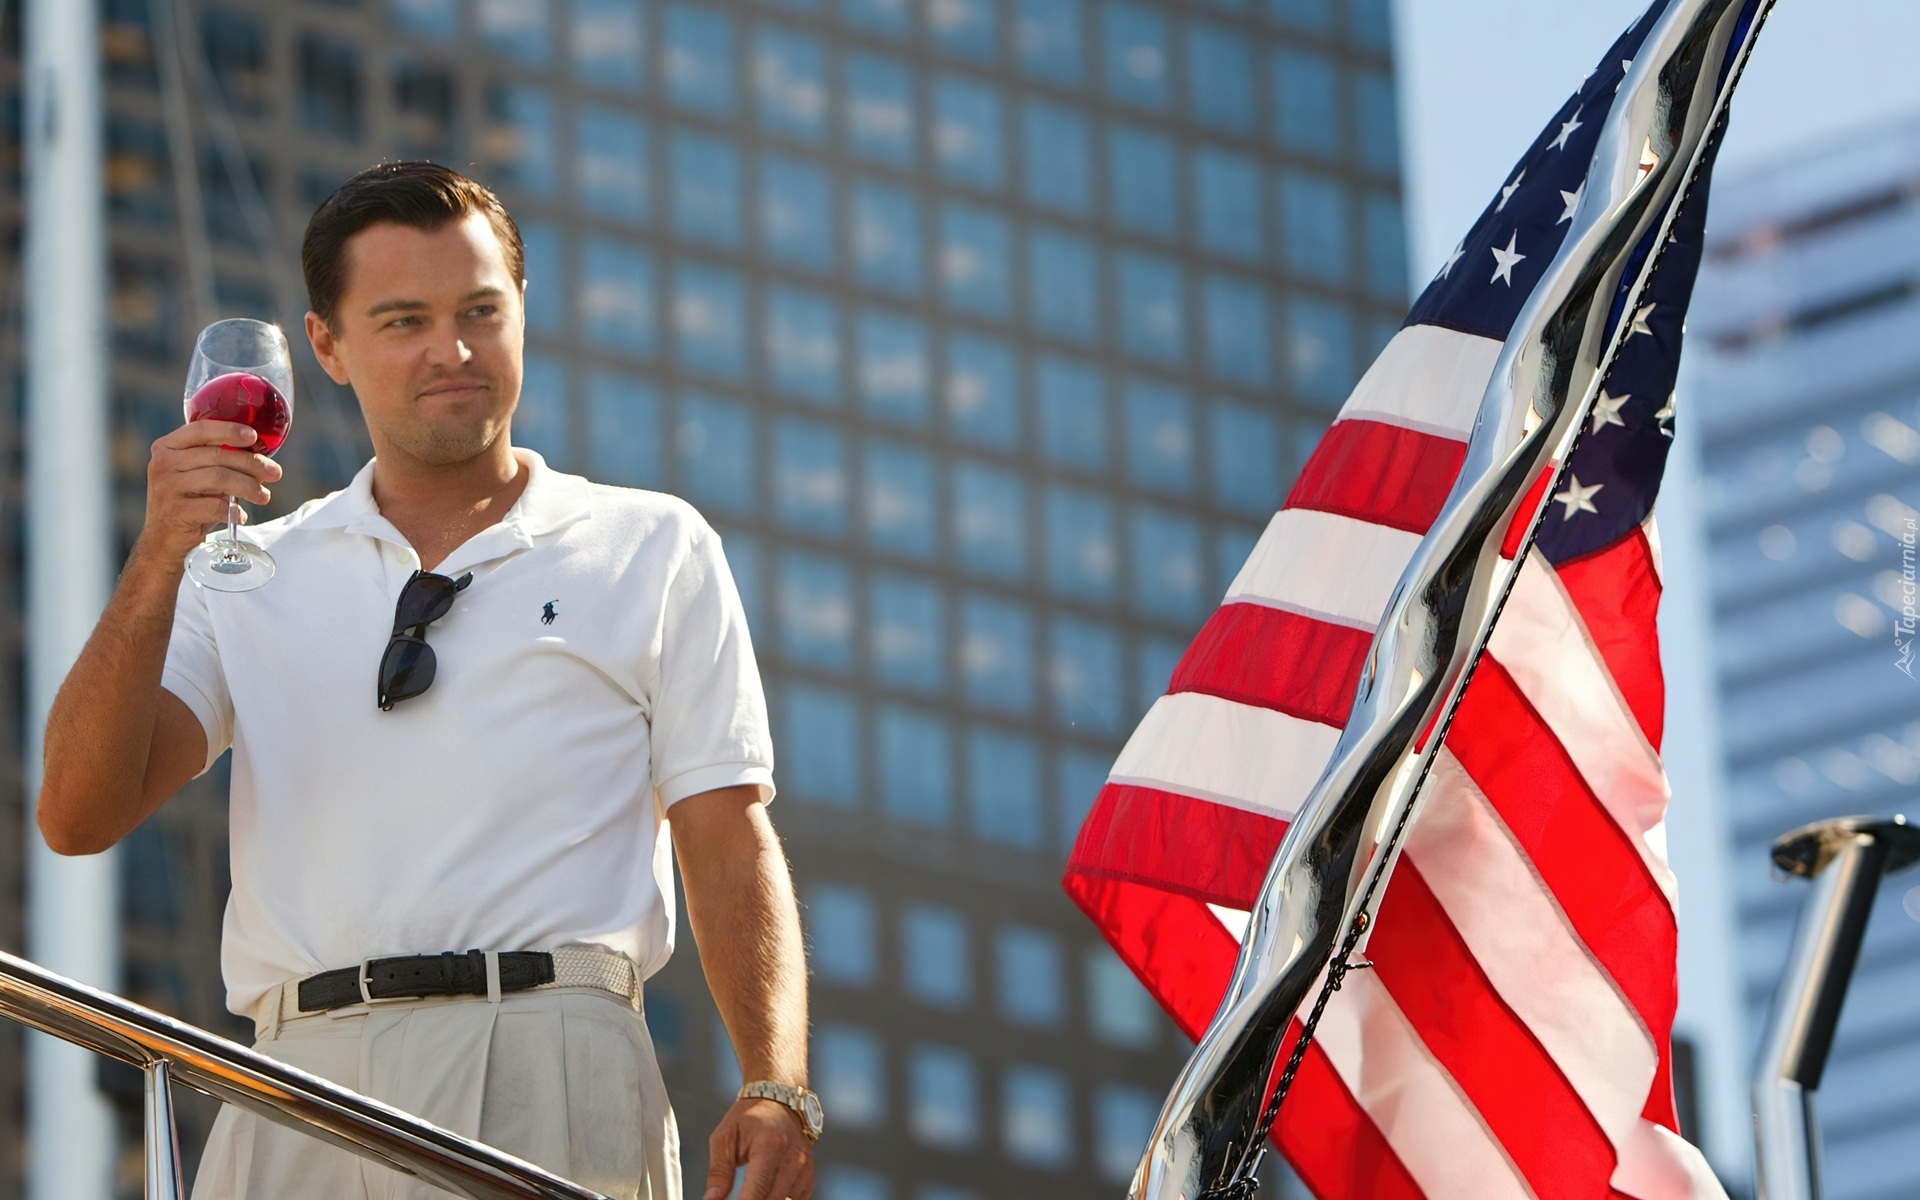 Leonardo DiCaprio, The Wolf of Wall Street